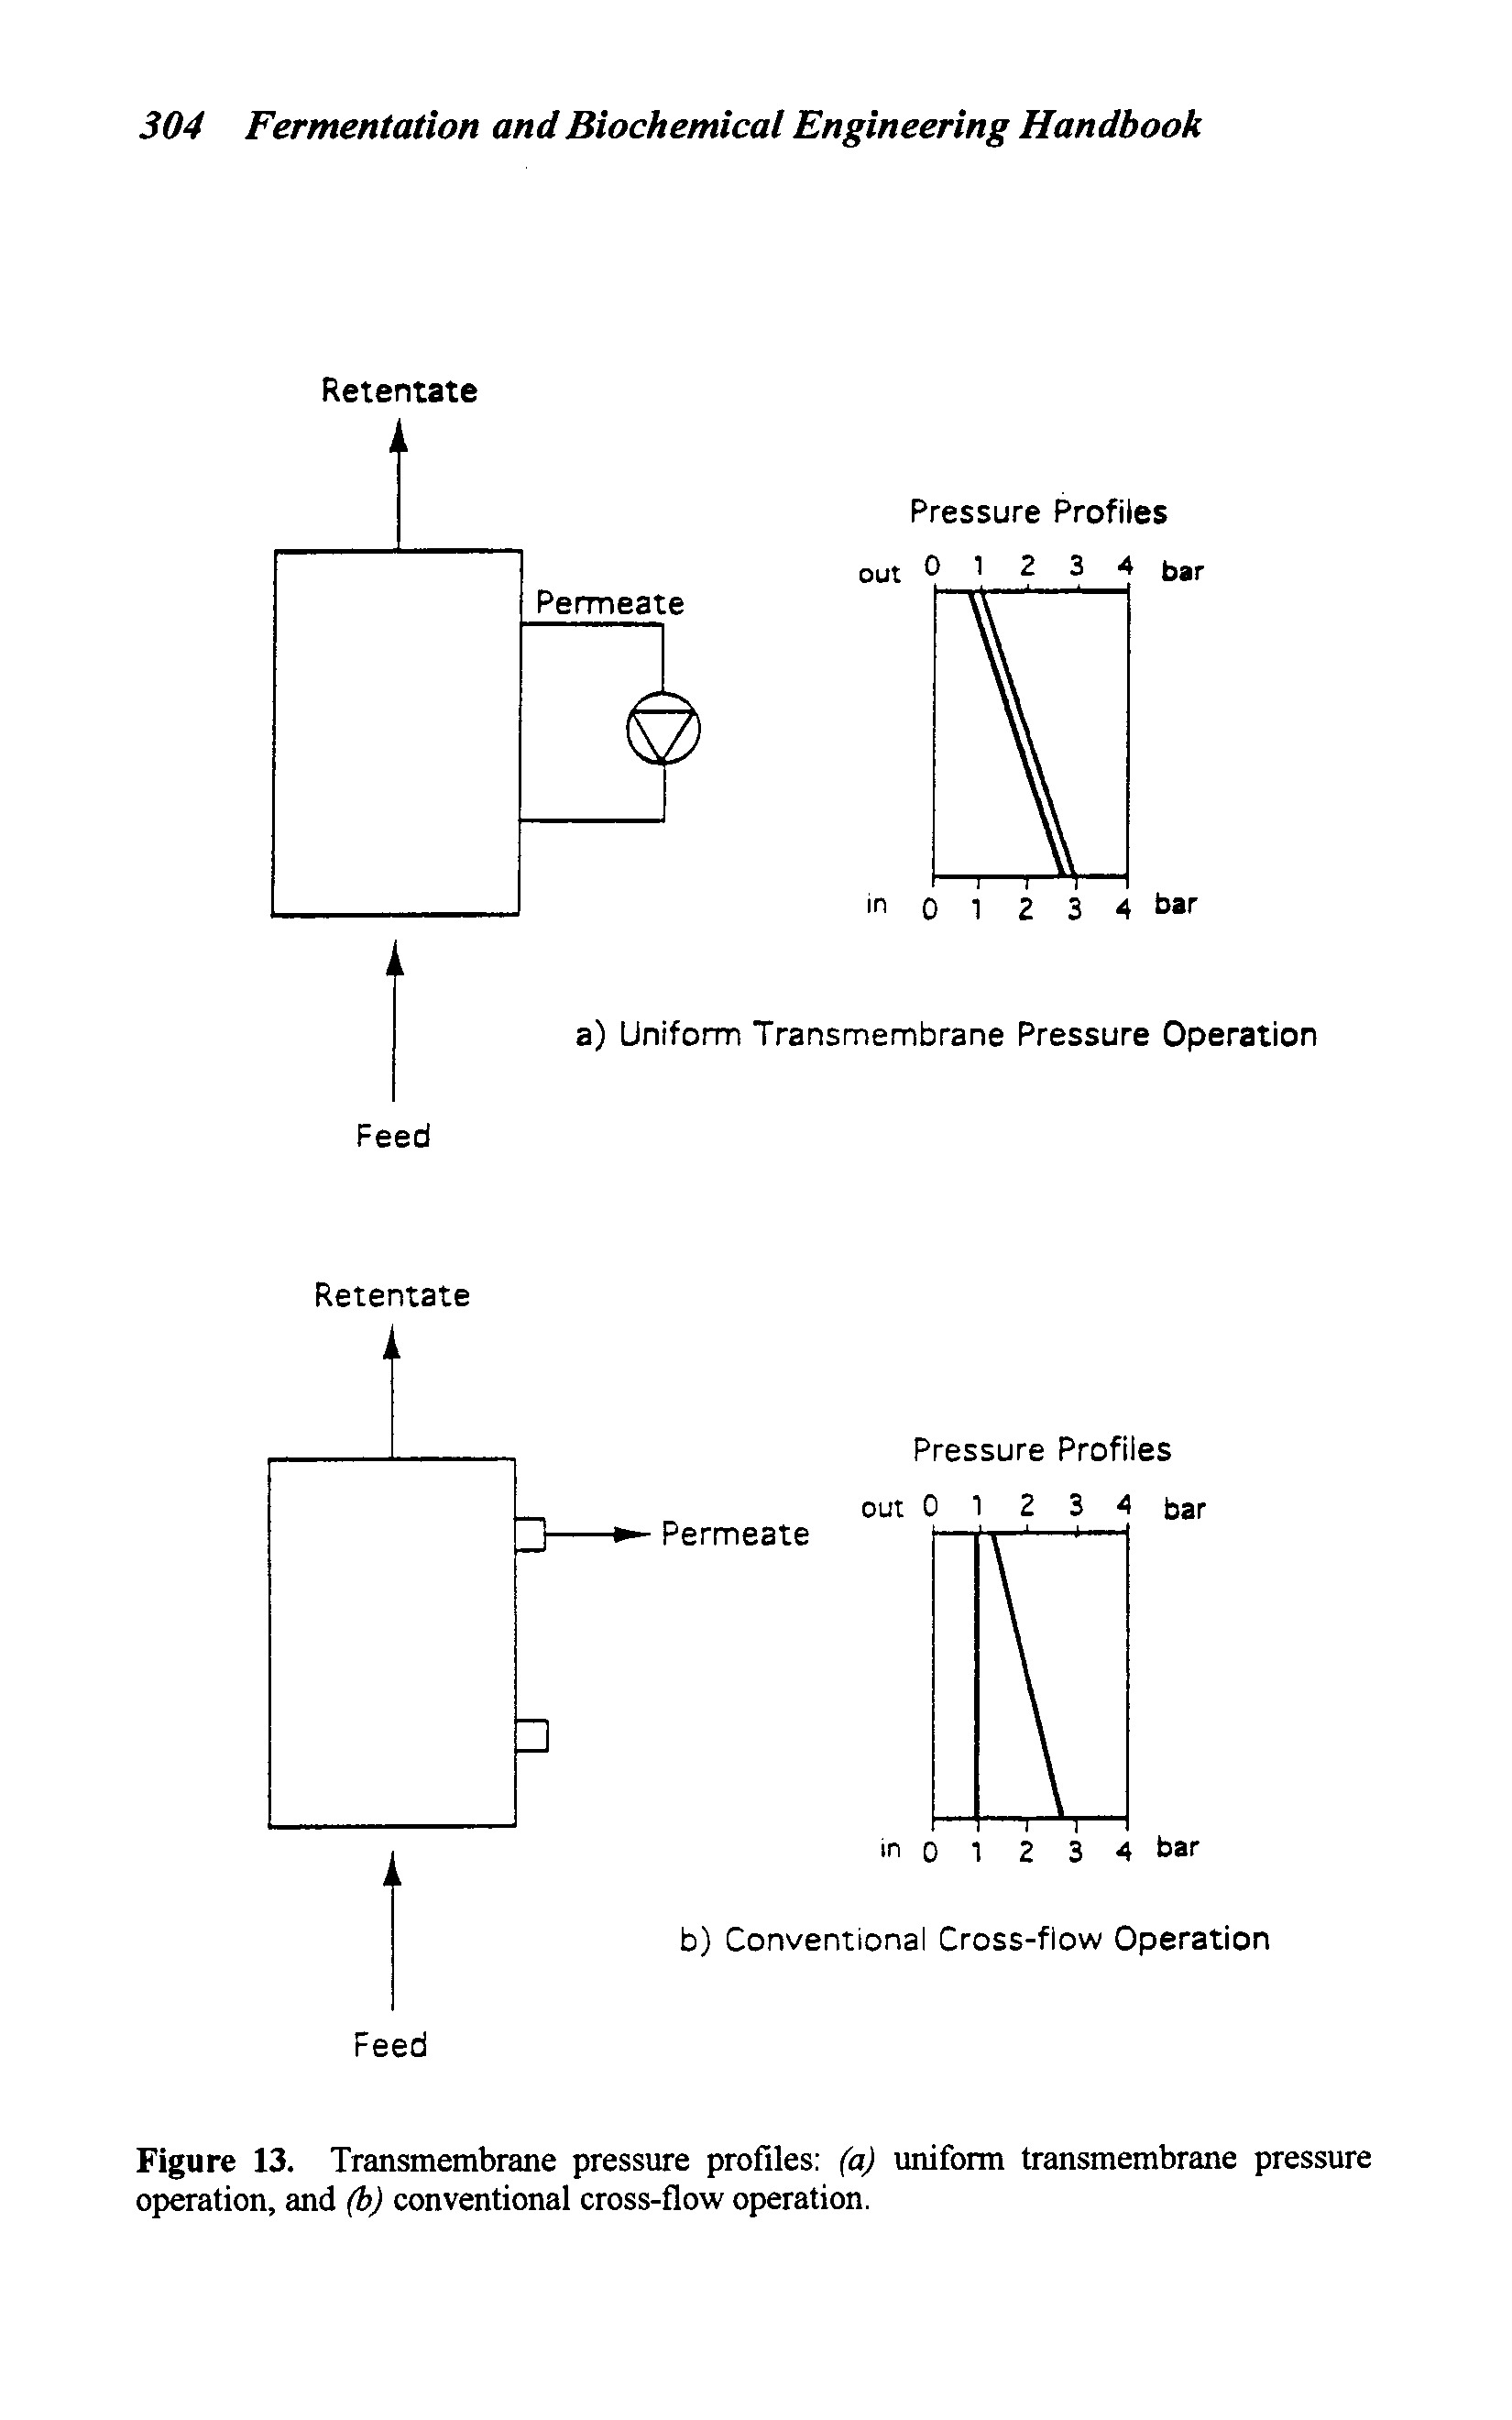 Figure 13. Transmembrane pressure profiles (a) uniform transmembrane pressure operation, and (b) conventional cross-flow operation.